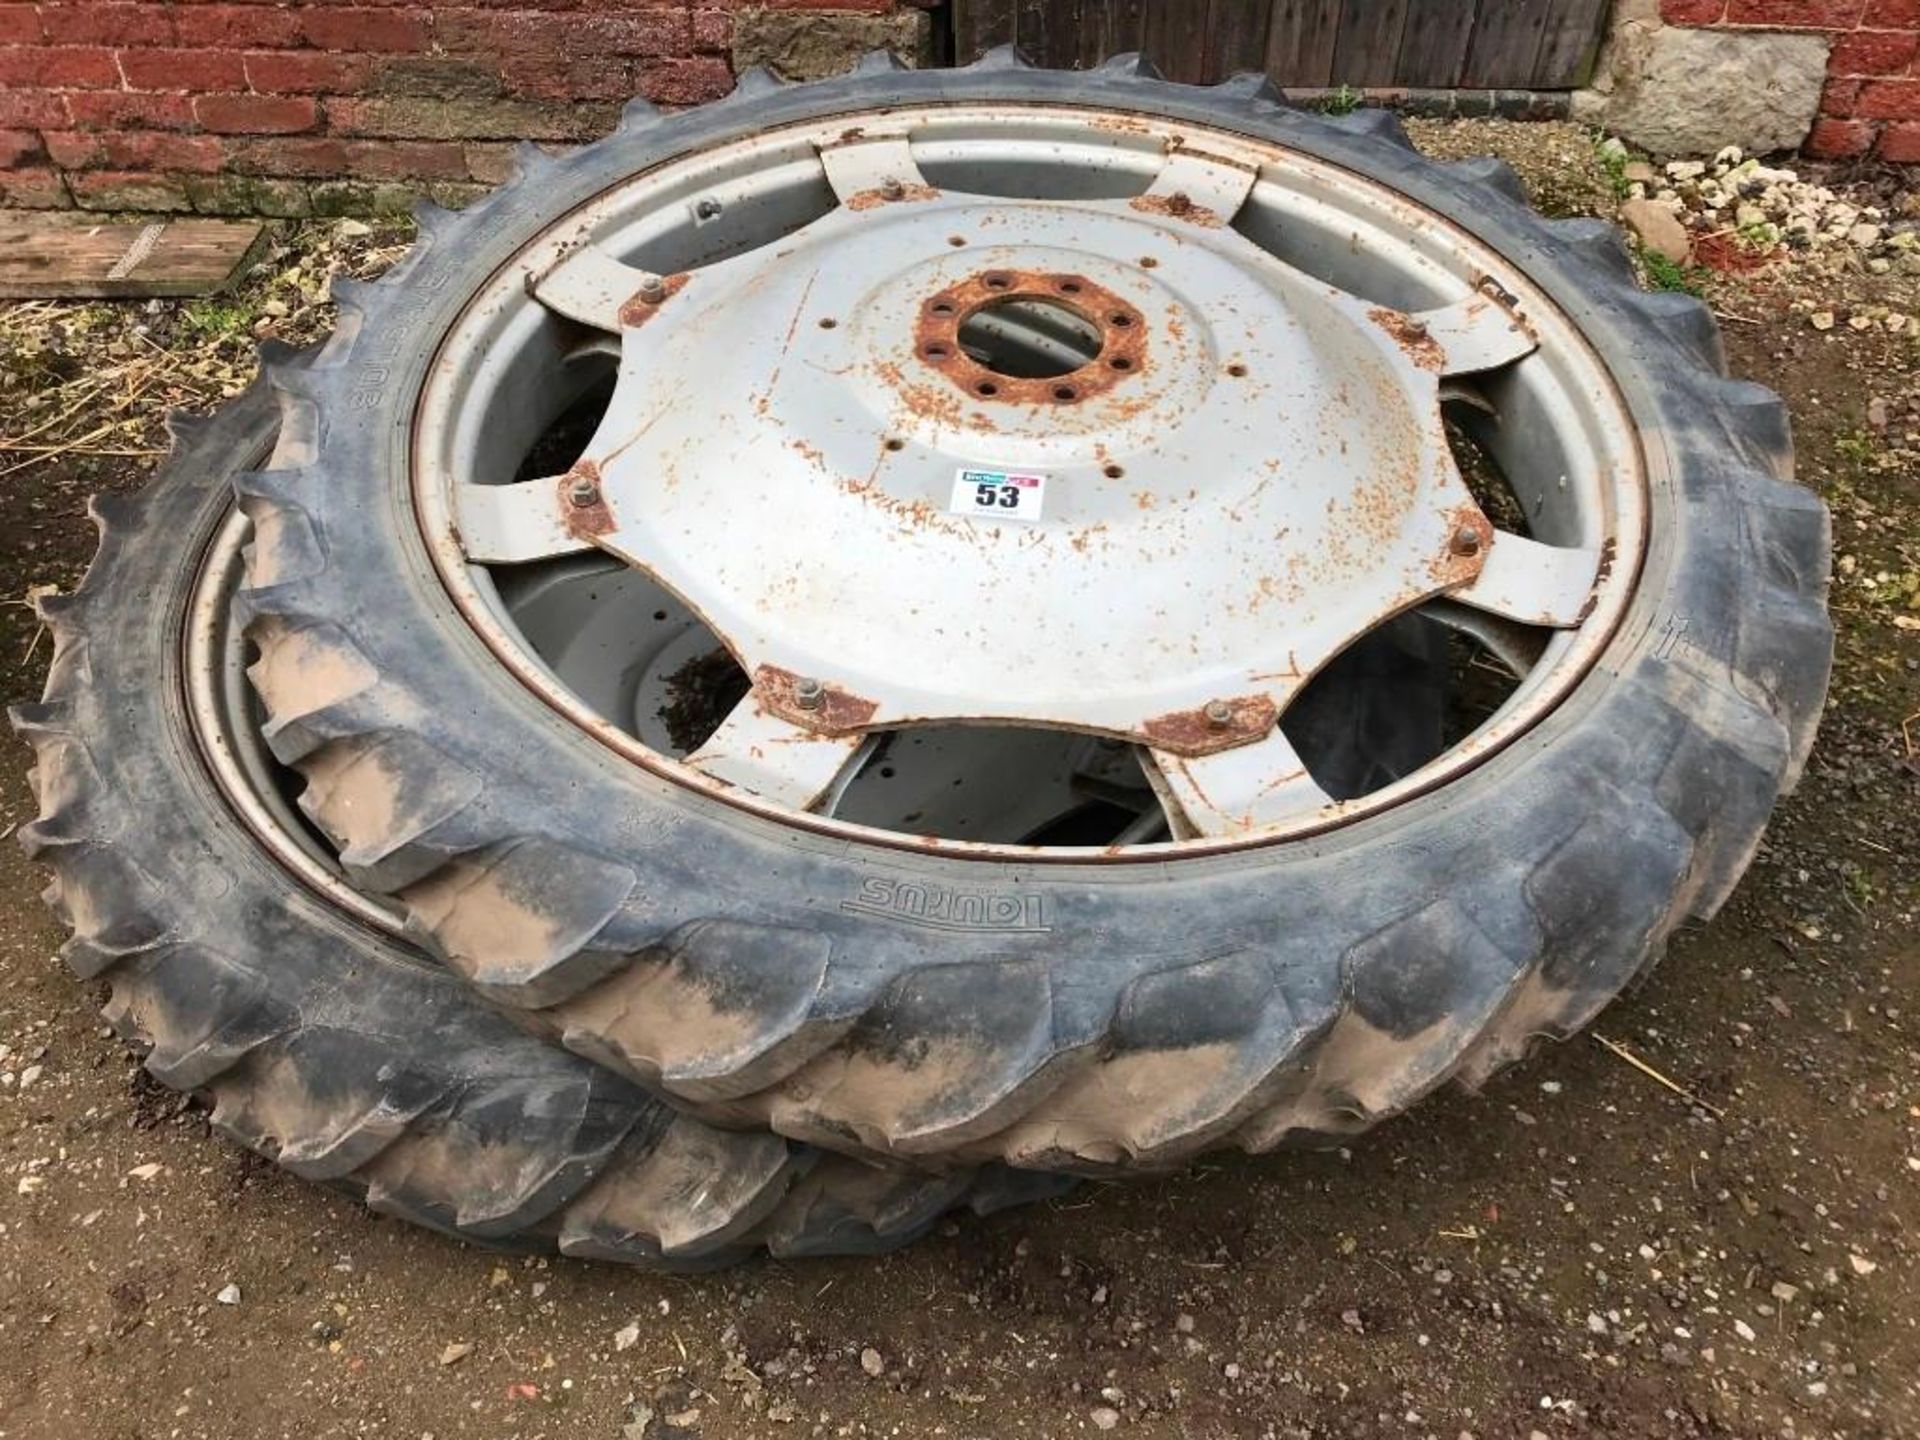 Pair of row crop wheels with Taurus 9.5R48 tyres